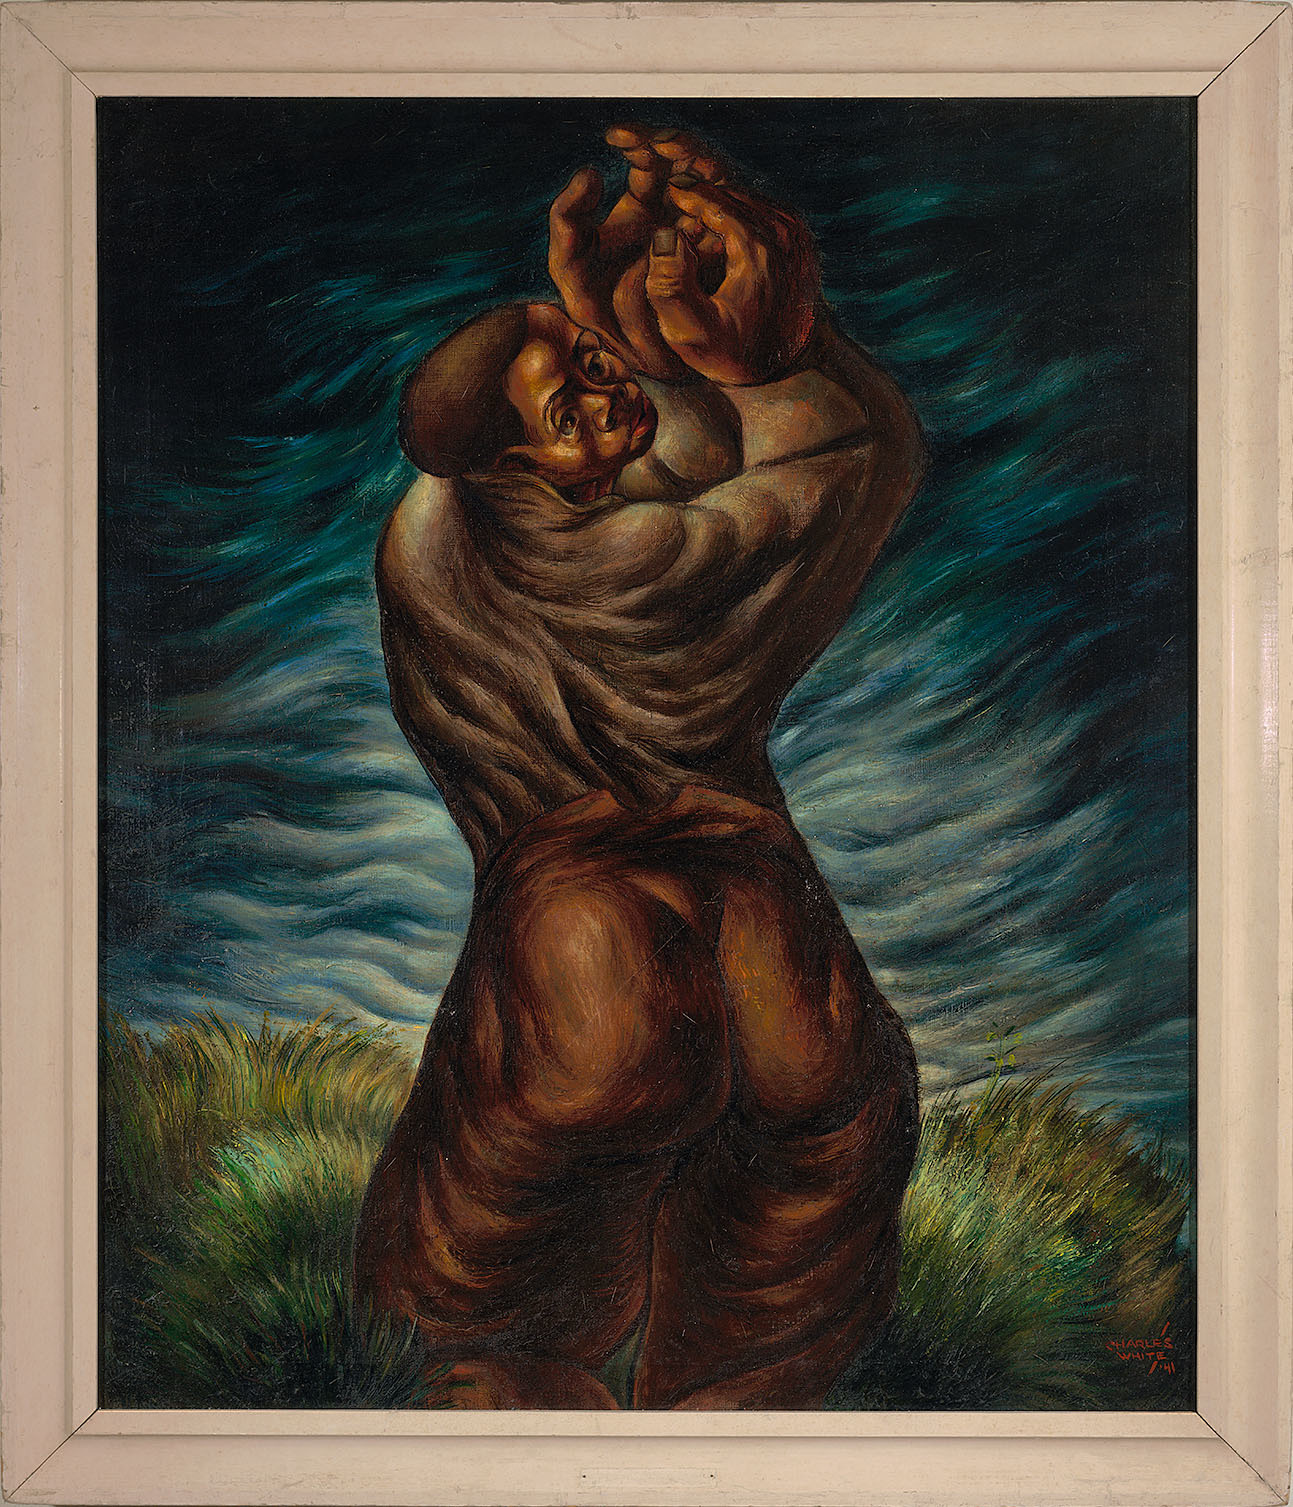 Charles White. _Spiritual_. 1941. Oil on canvas. 36 × 30" (91.4 × 76.2 cm). South Side Community Art Center, Chicago. © The Charles White Archives/ Photo: Jamie Stukenberg, Professional Graphics, Inc.
